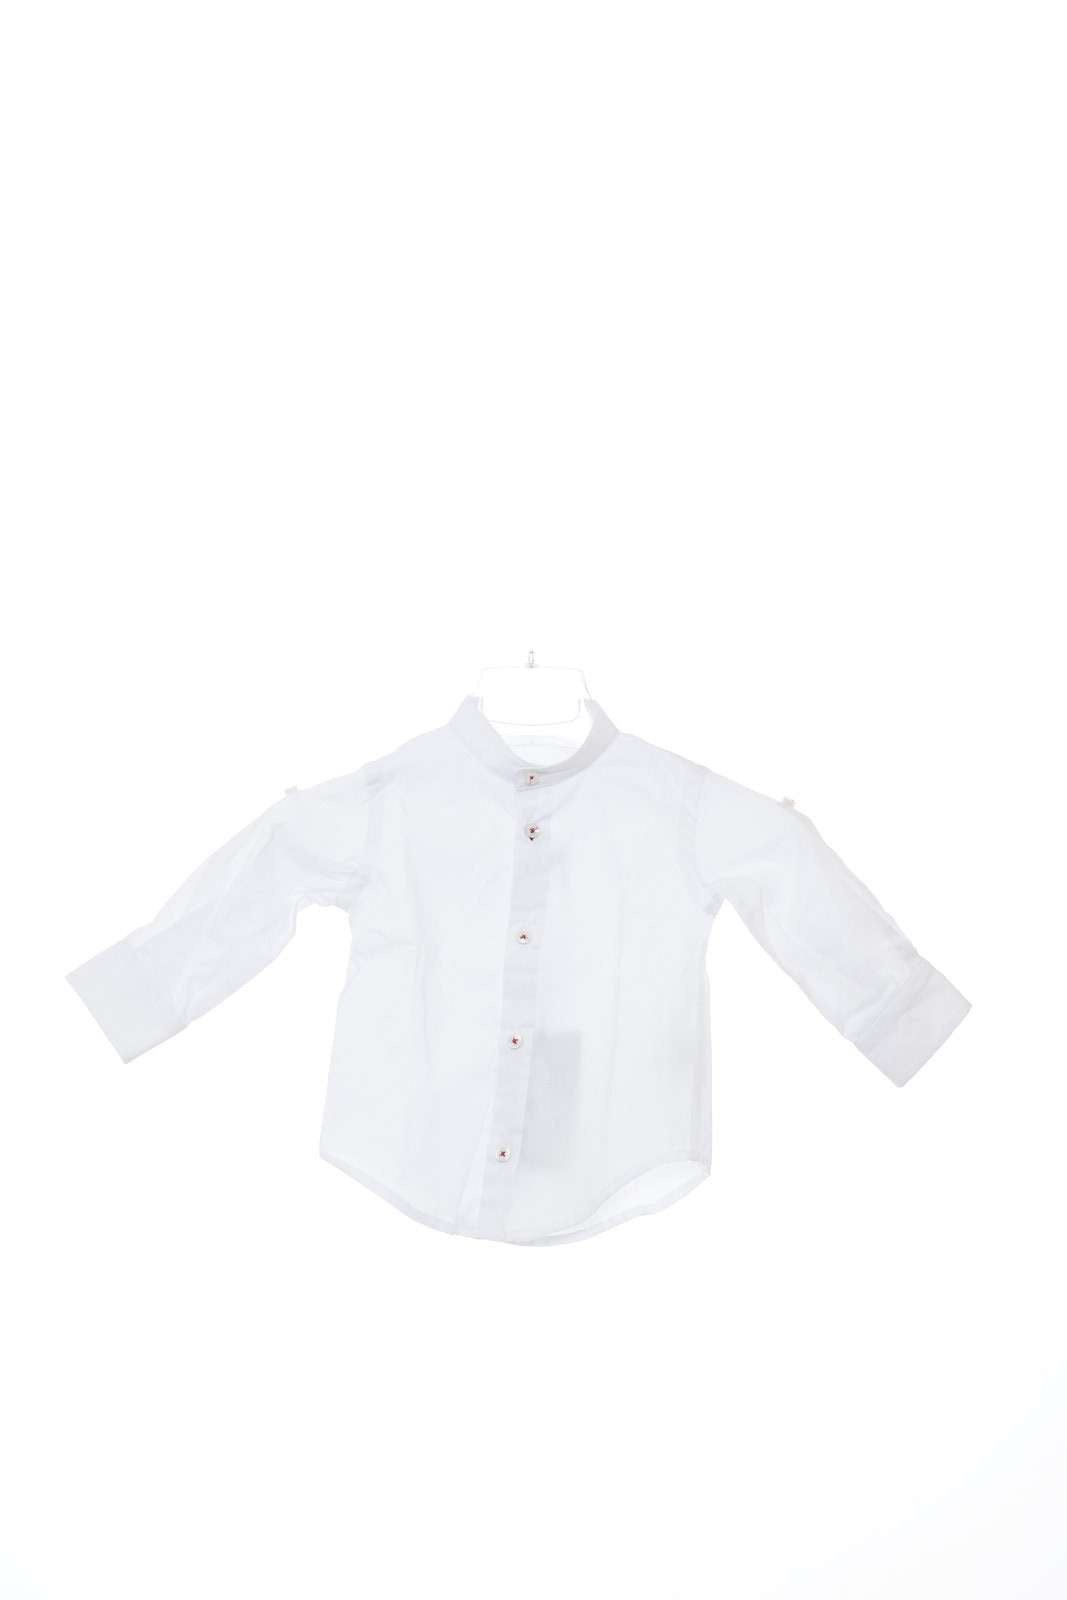 Ronnie Kay mandarin collar children's shirt